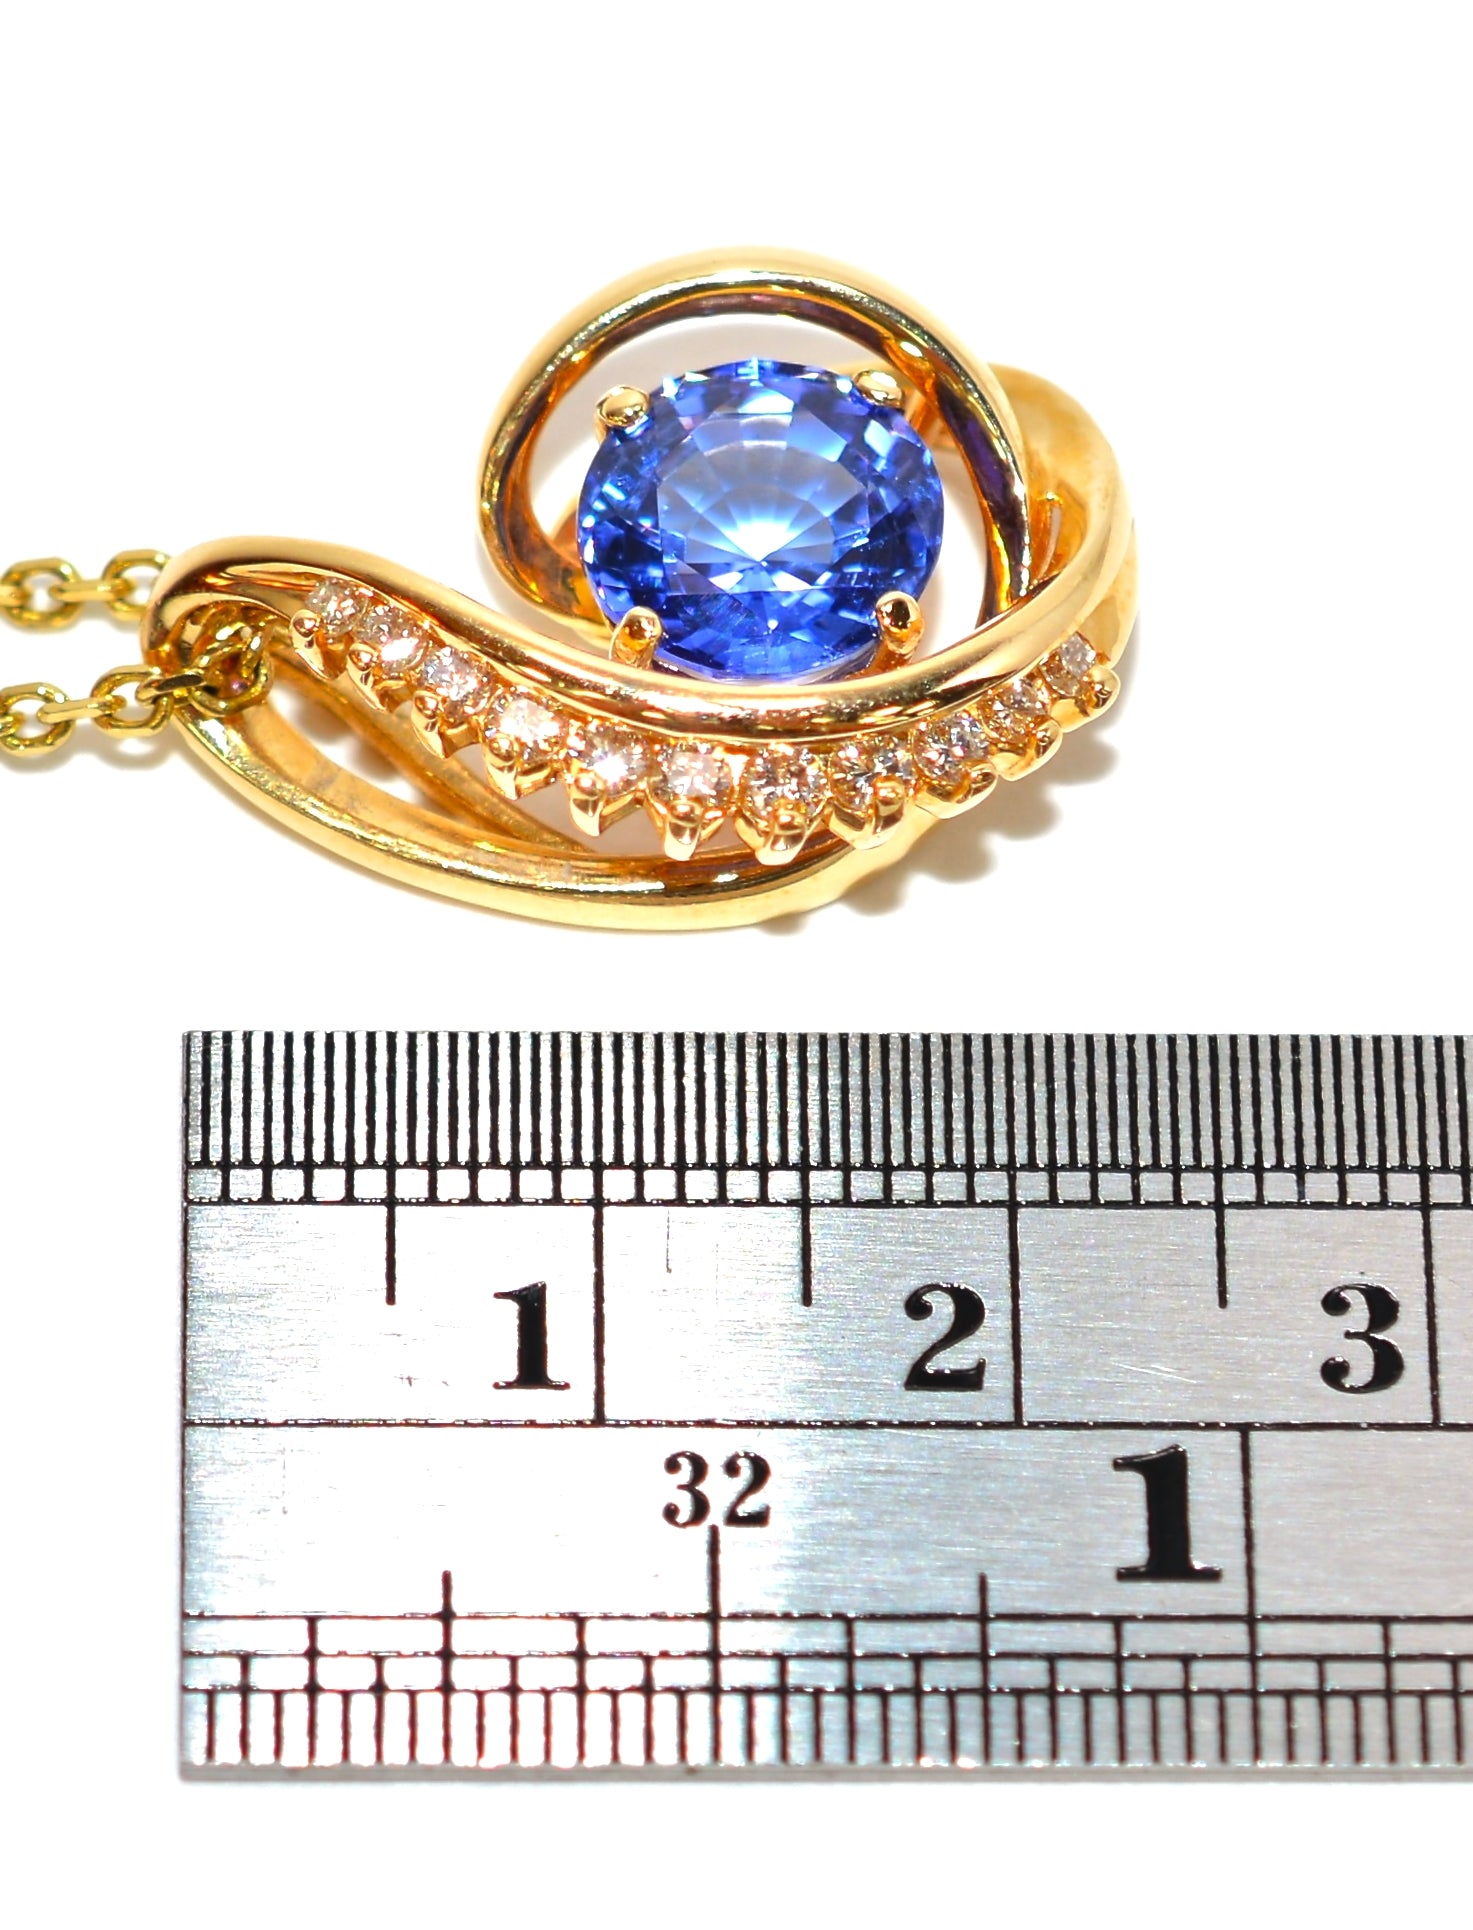 Natural D'Block Tanzanite & Diamond Necklace 14K Solid Gold 3.18tcw Tanzanite Necklace Designer Pendant Cocktail Necklace Statement Jewelry